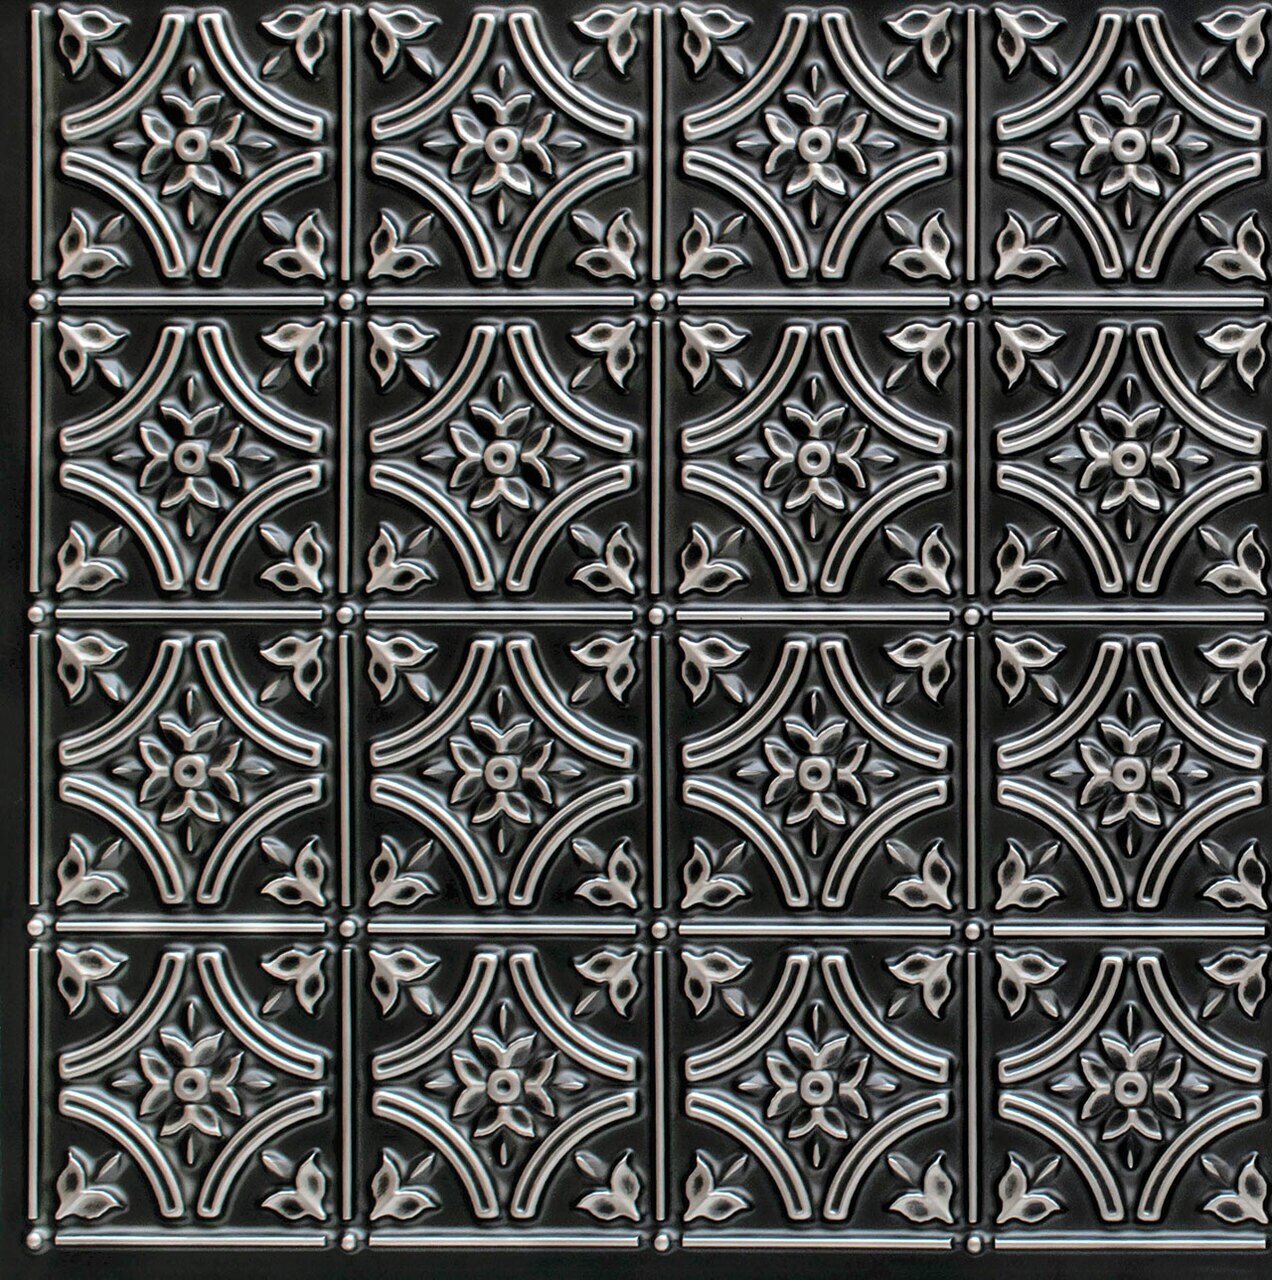 1:24th Black Backed Grey Ornate Design Tile Sheet With Black Grout 